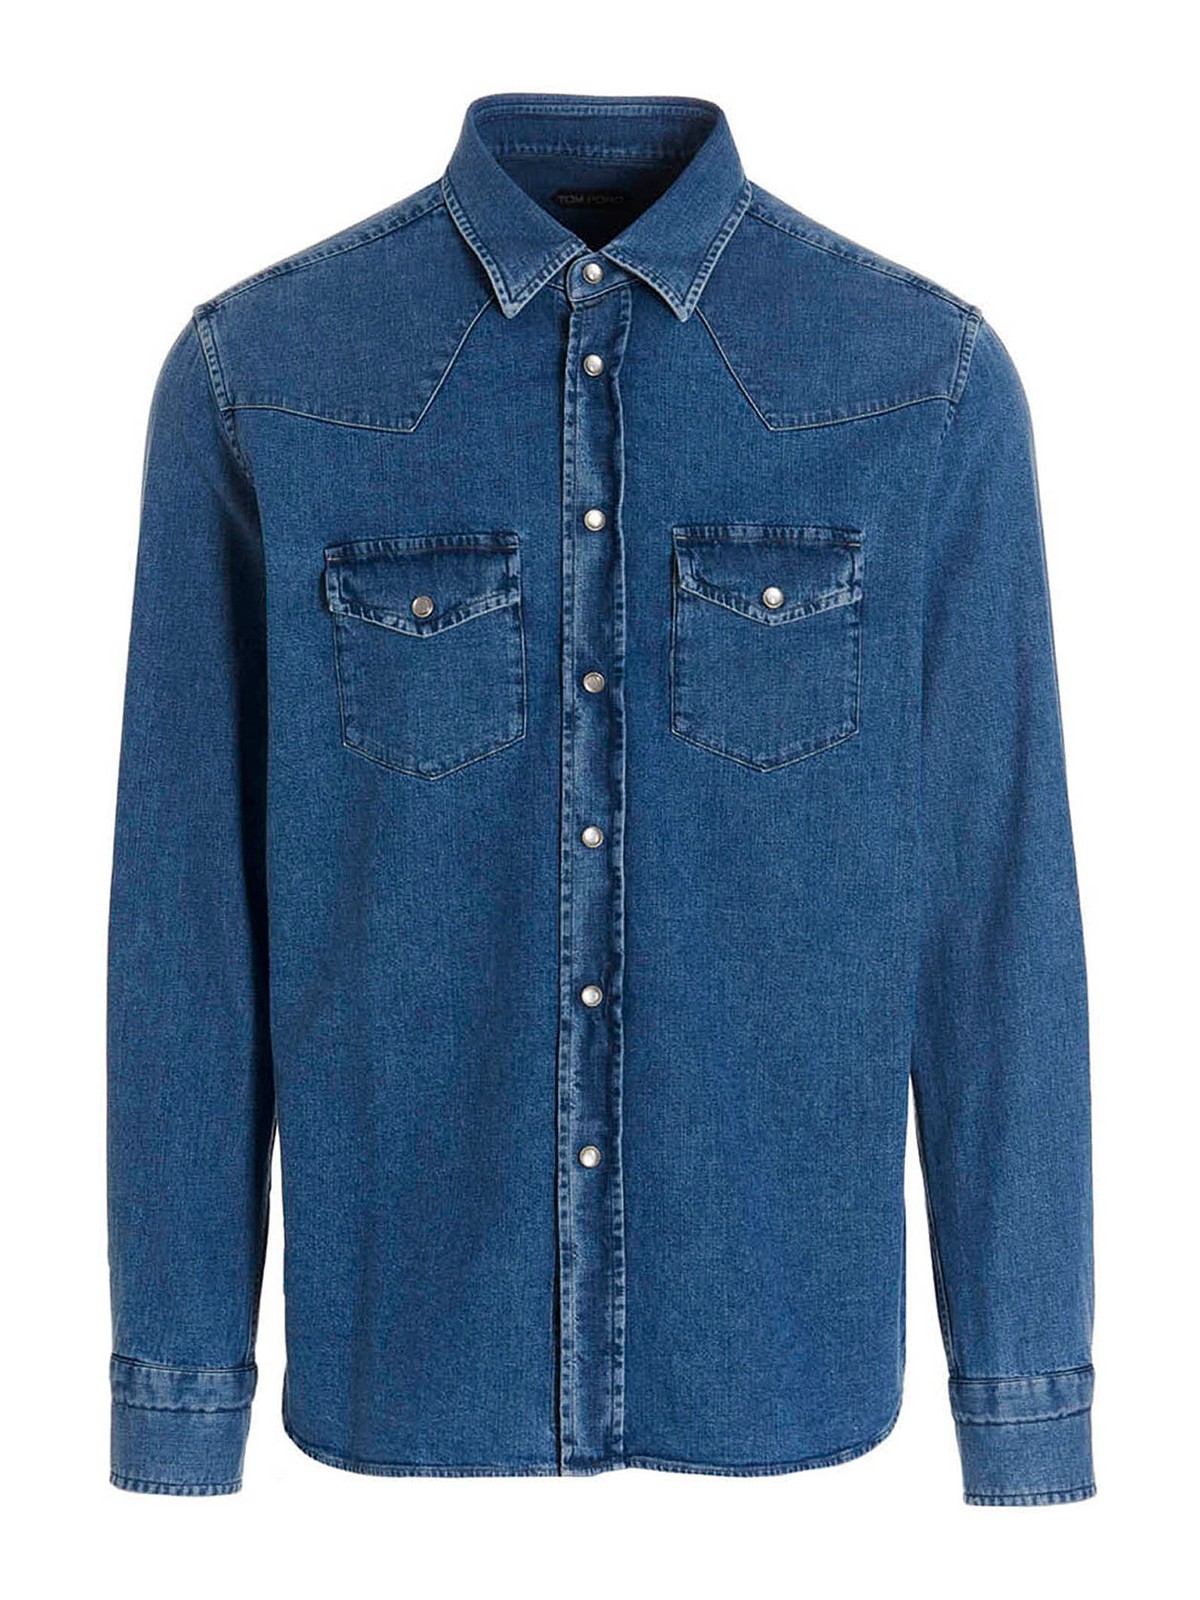 Tom Ford Denim Shirt In Blue